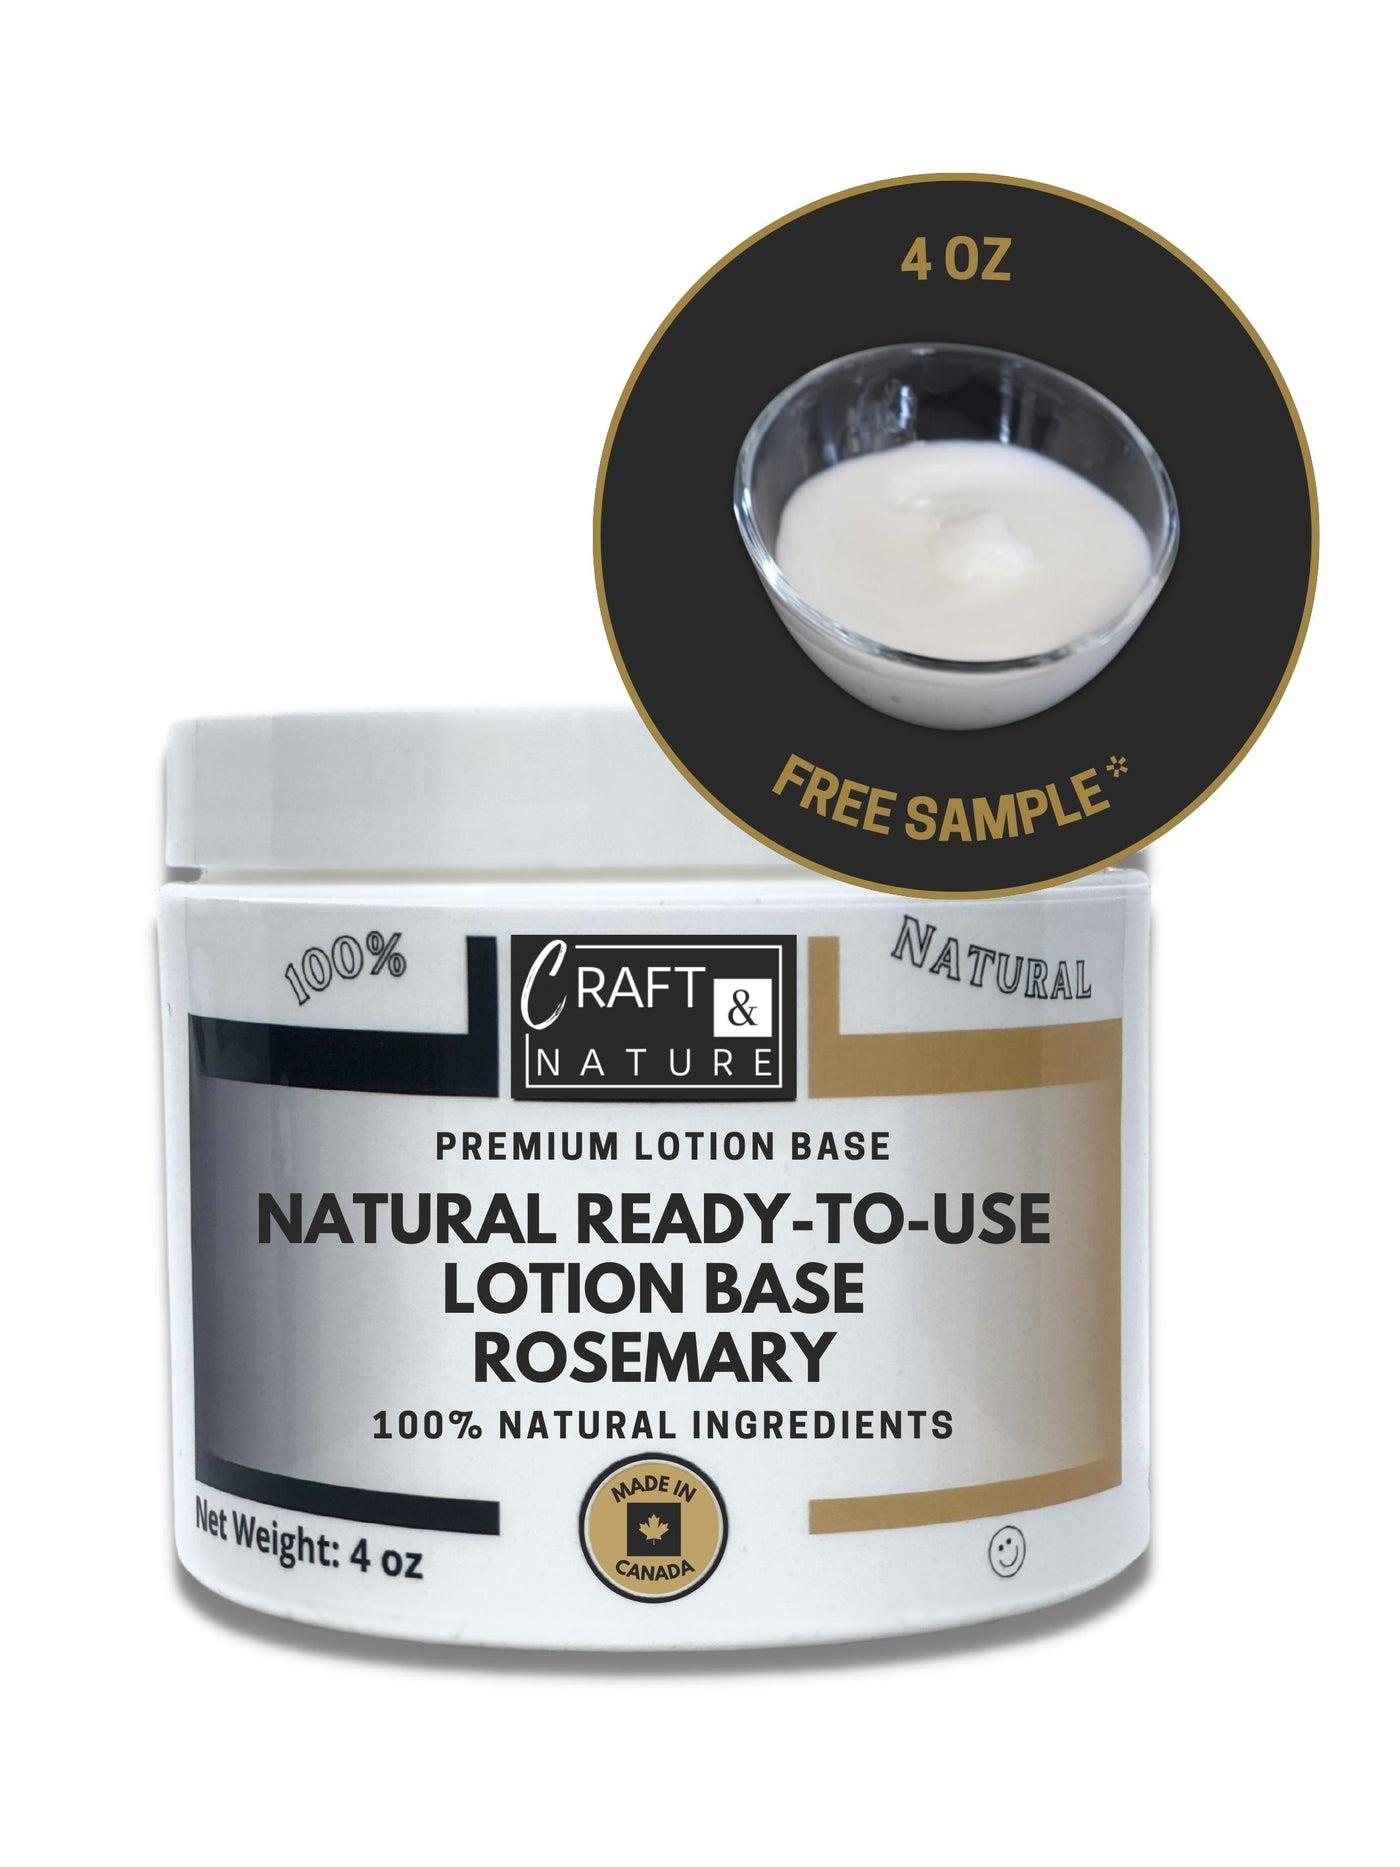 Natural Ready-To-Use Lotion Base - Rosemary